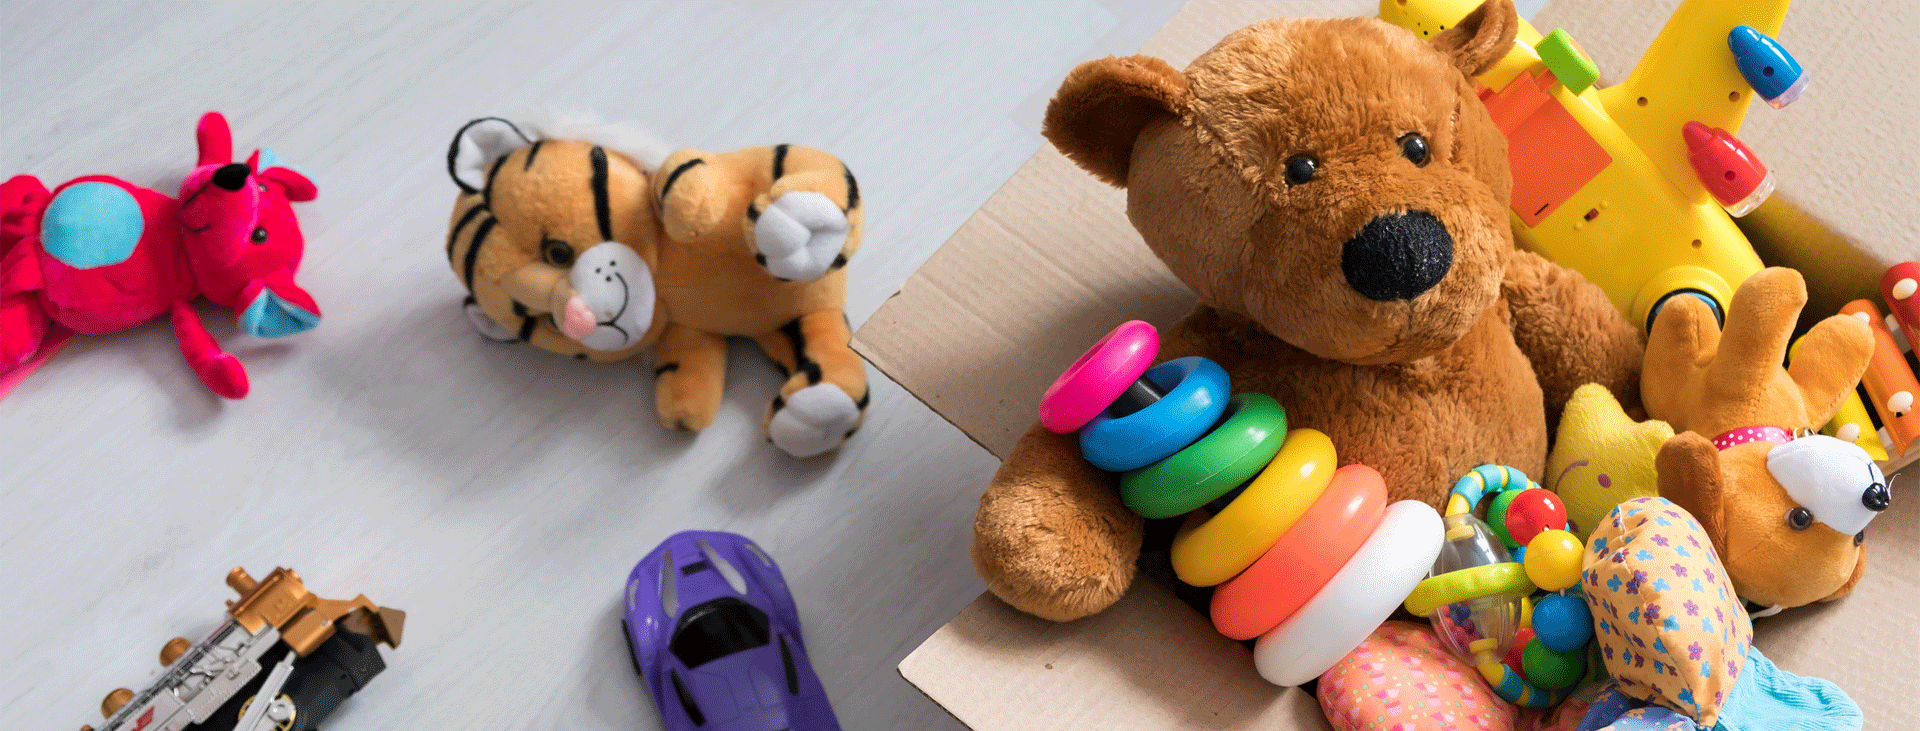 A pile of toys including a couple of cute teddy bears